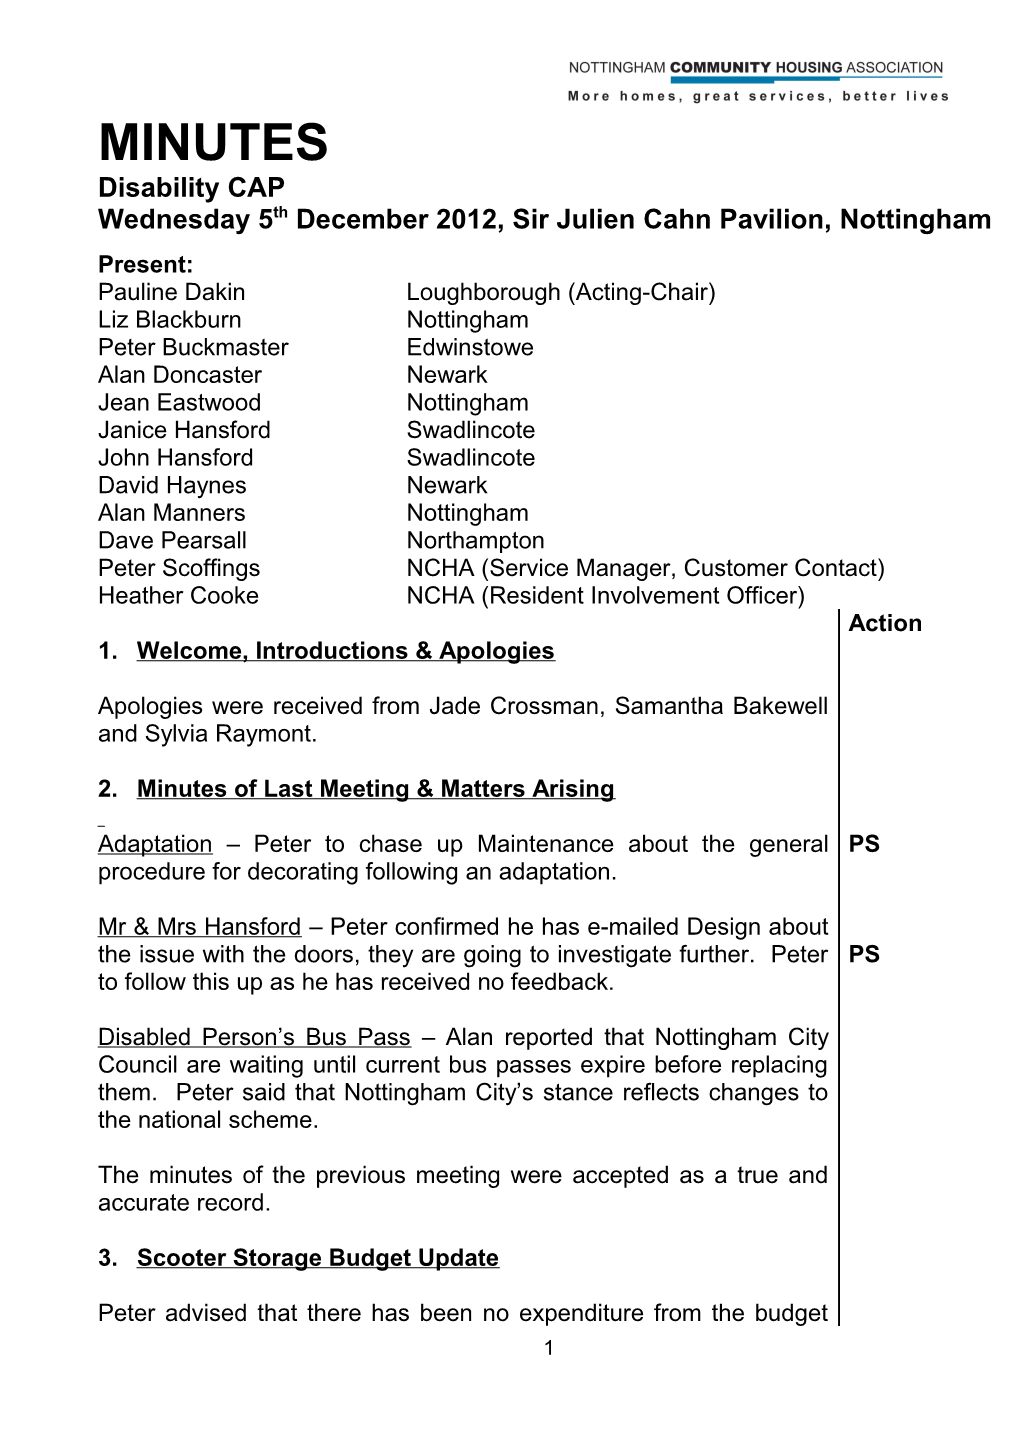 Wednesday 5Th December 2012, Sir Julien Cahn Pavilion, Nottingham